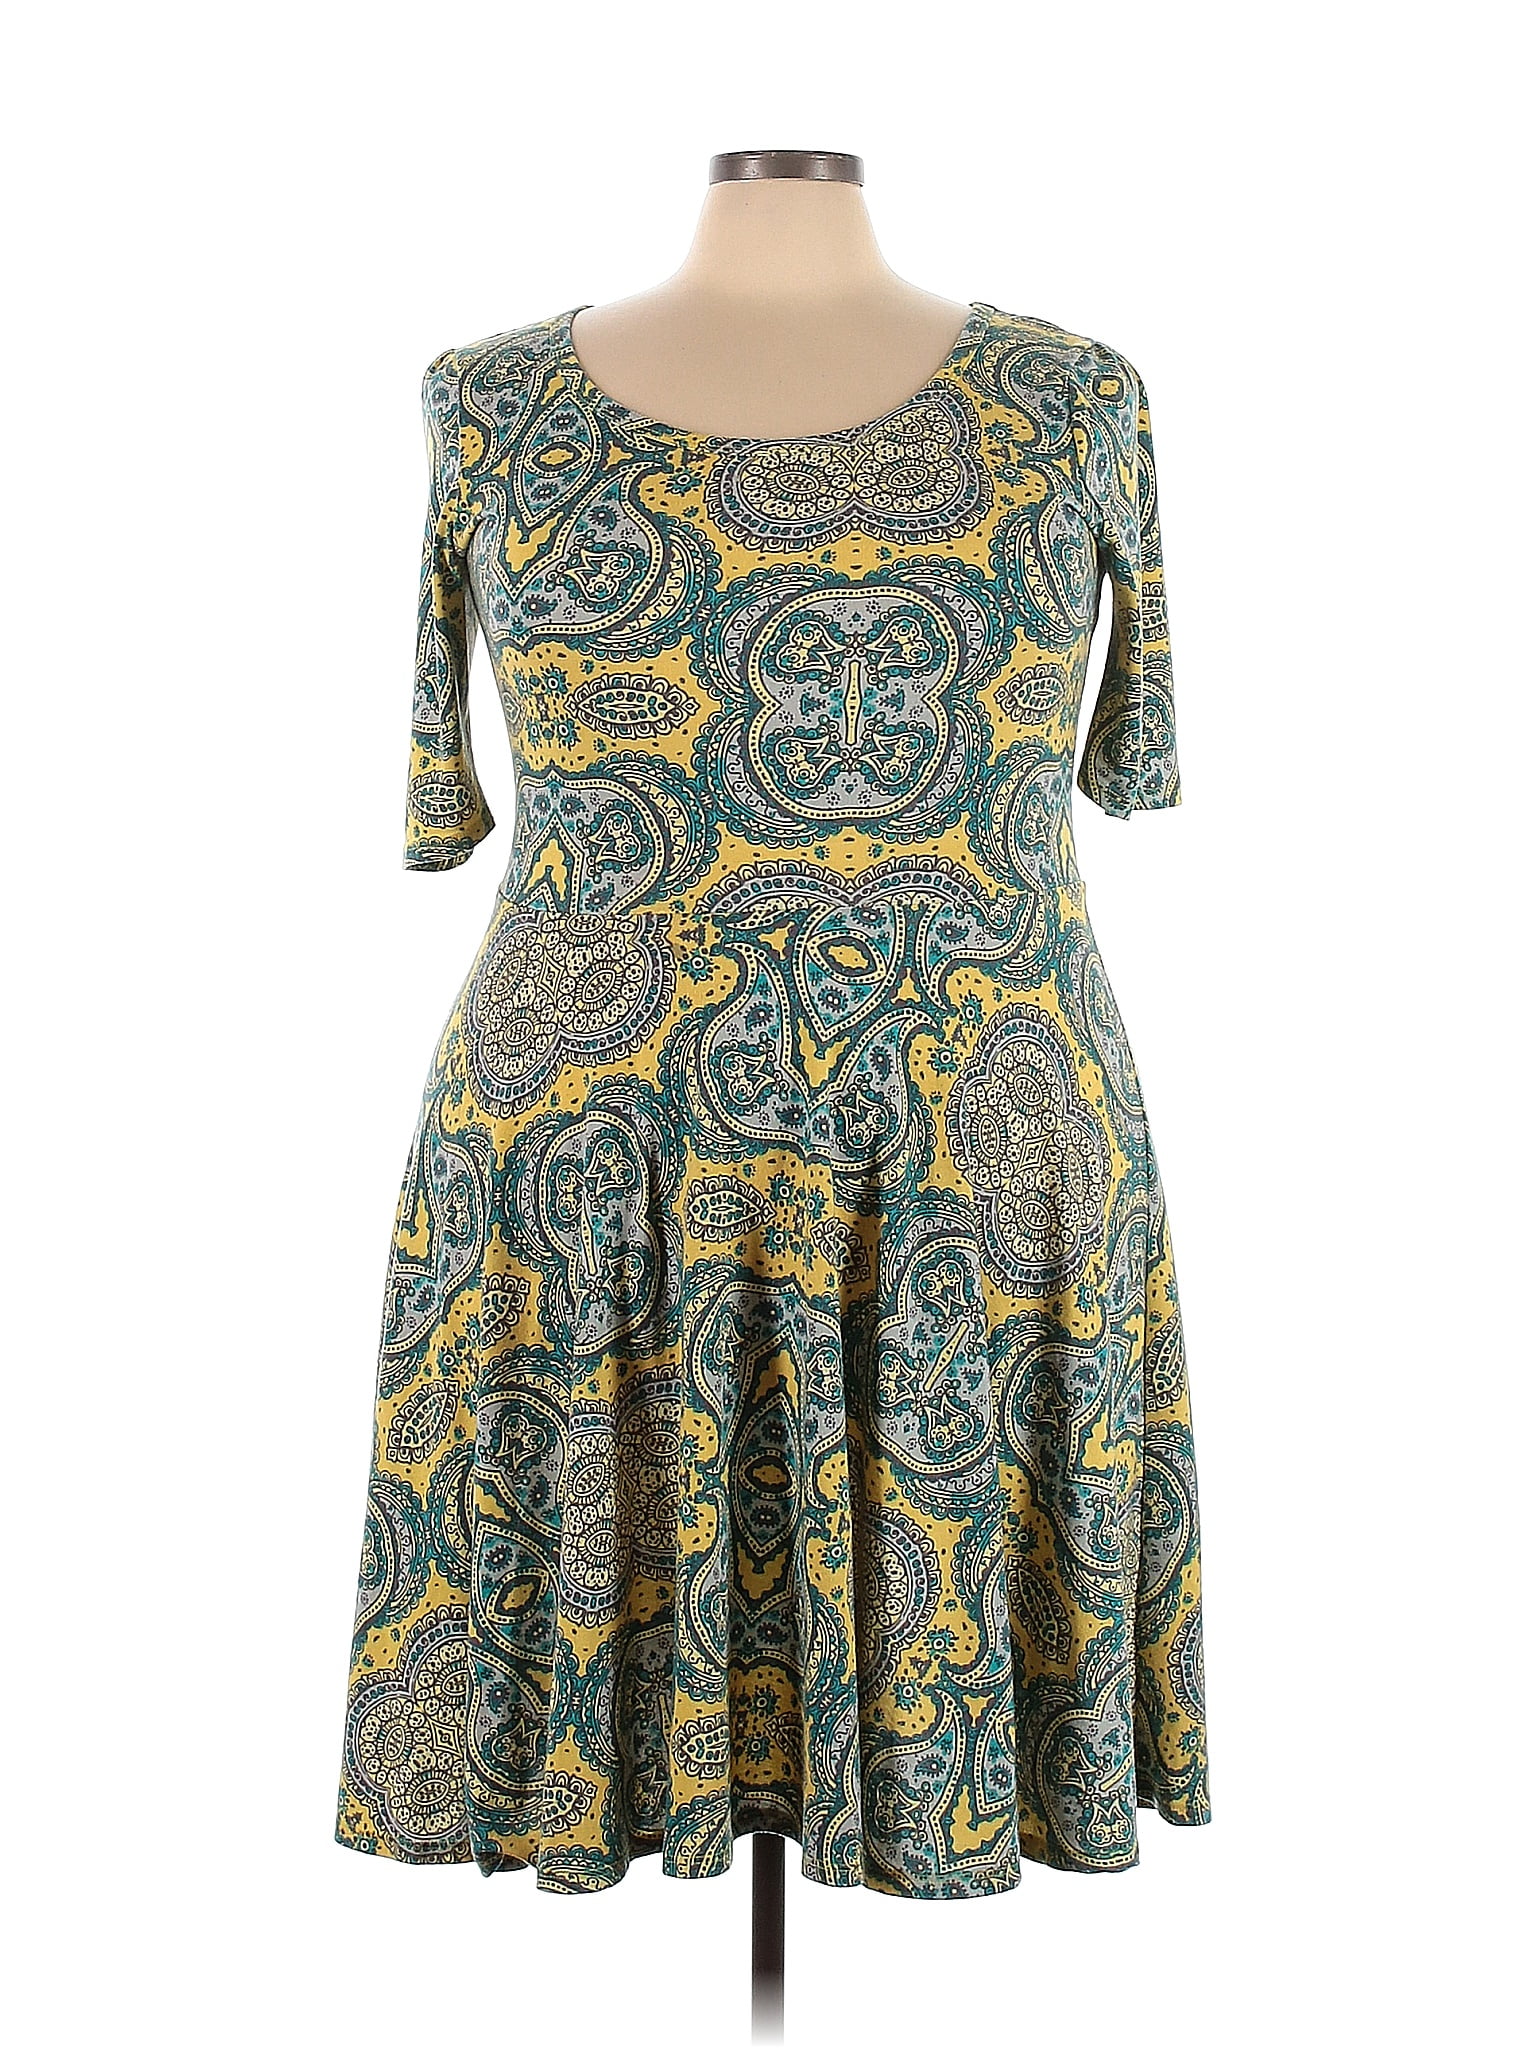 Lularoe Multi Color Teal Casual Dress Size 3X (Plus) - 43% off | thredUP